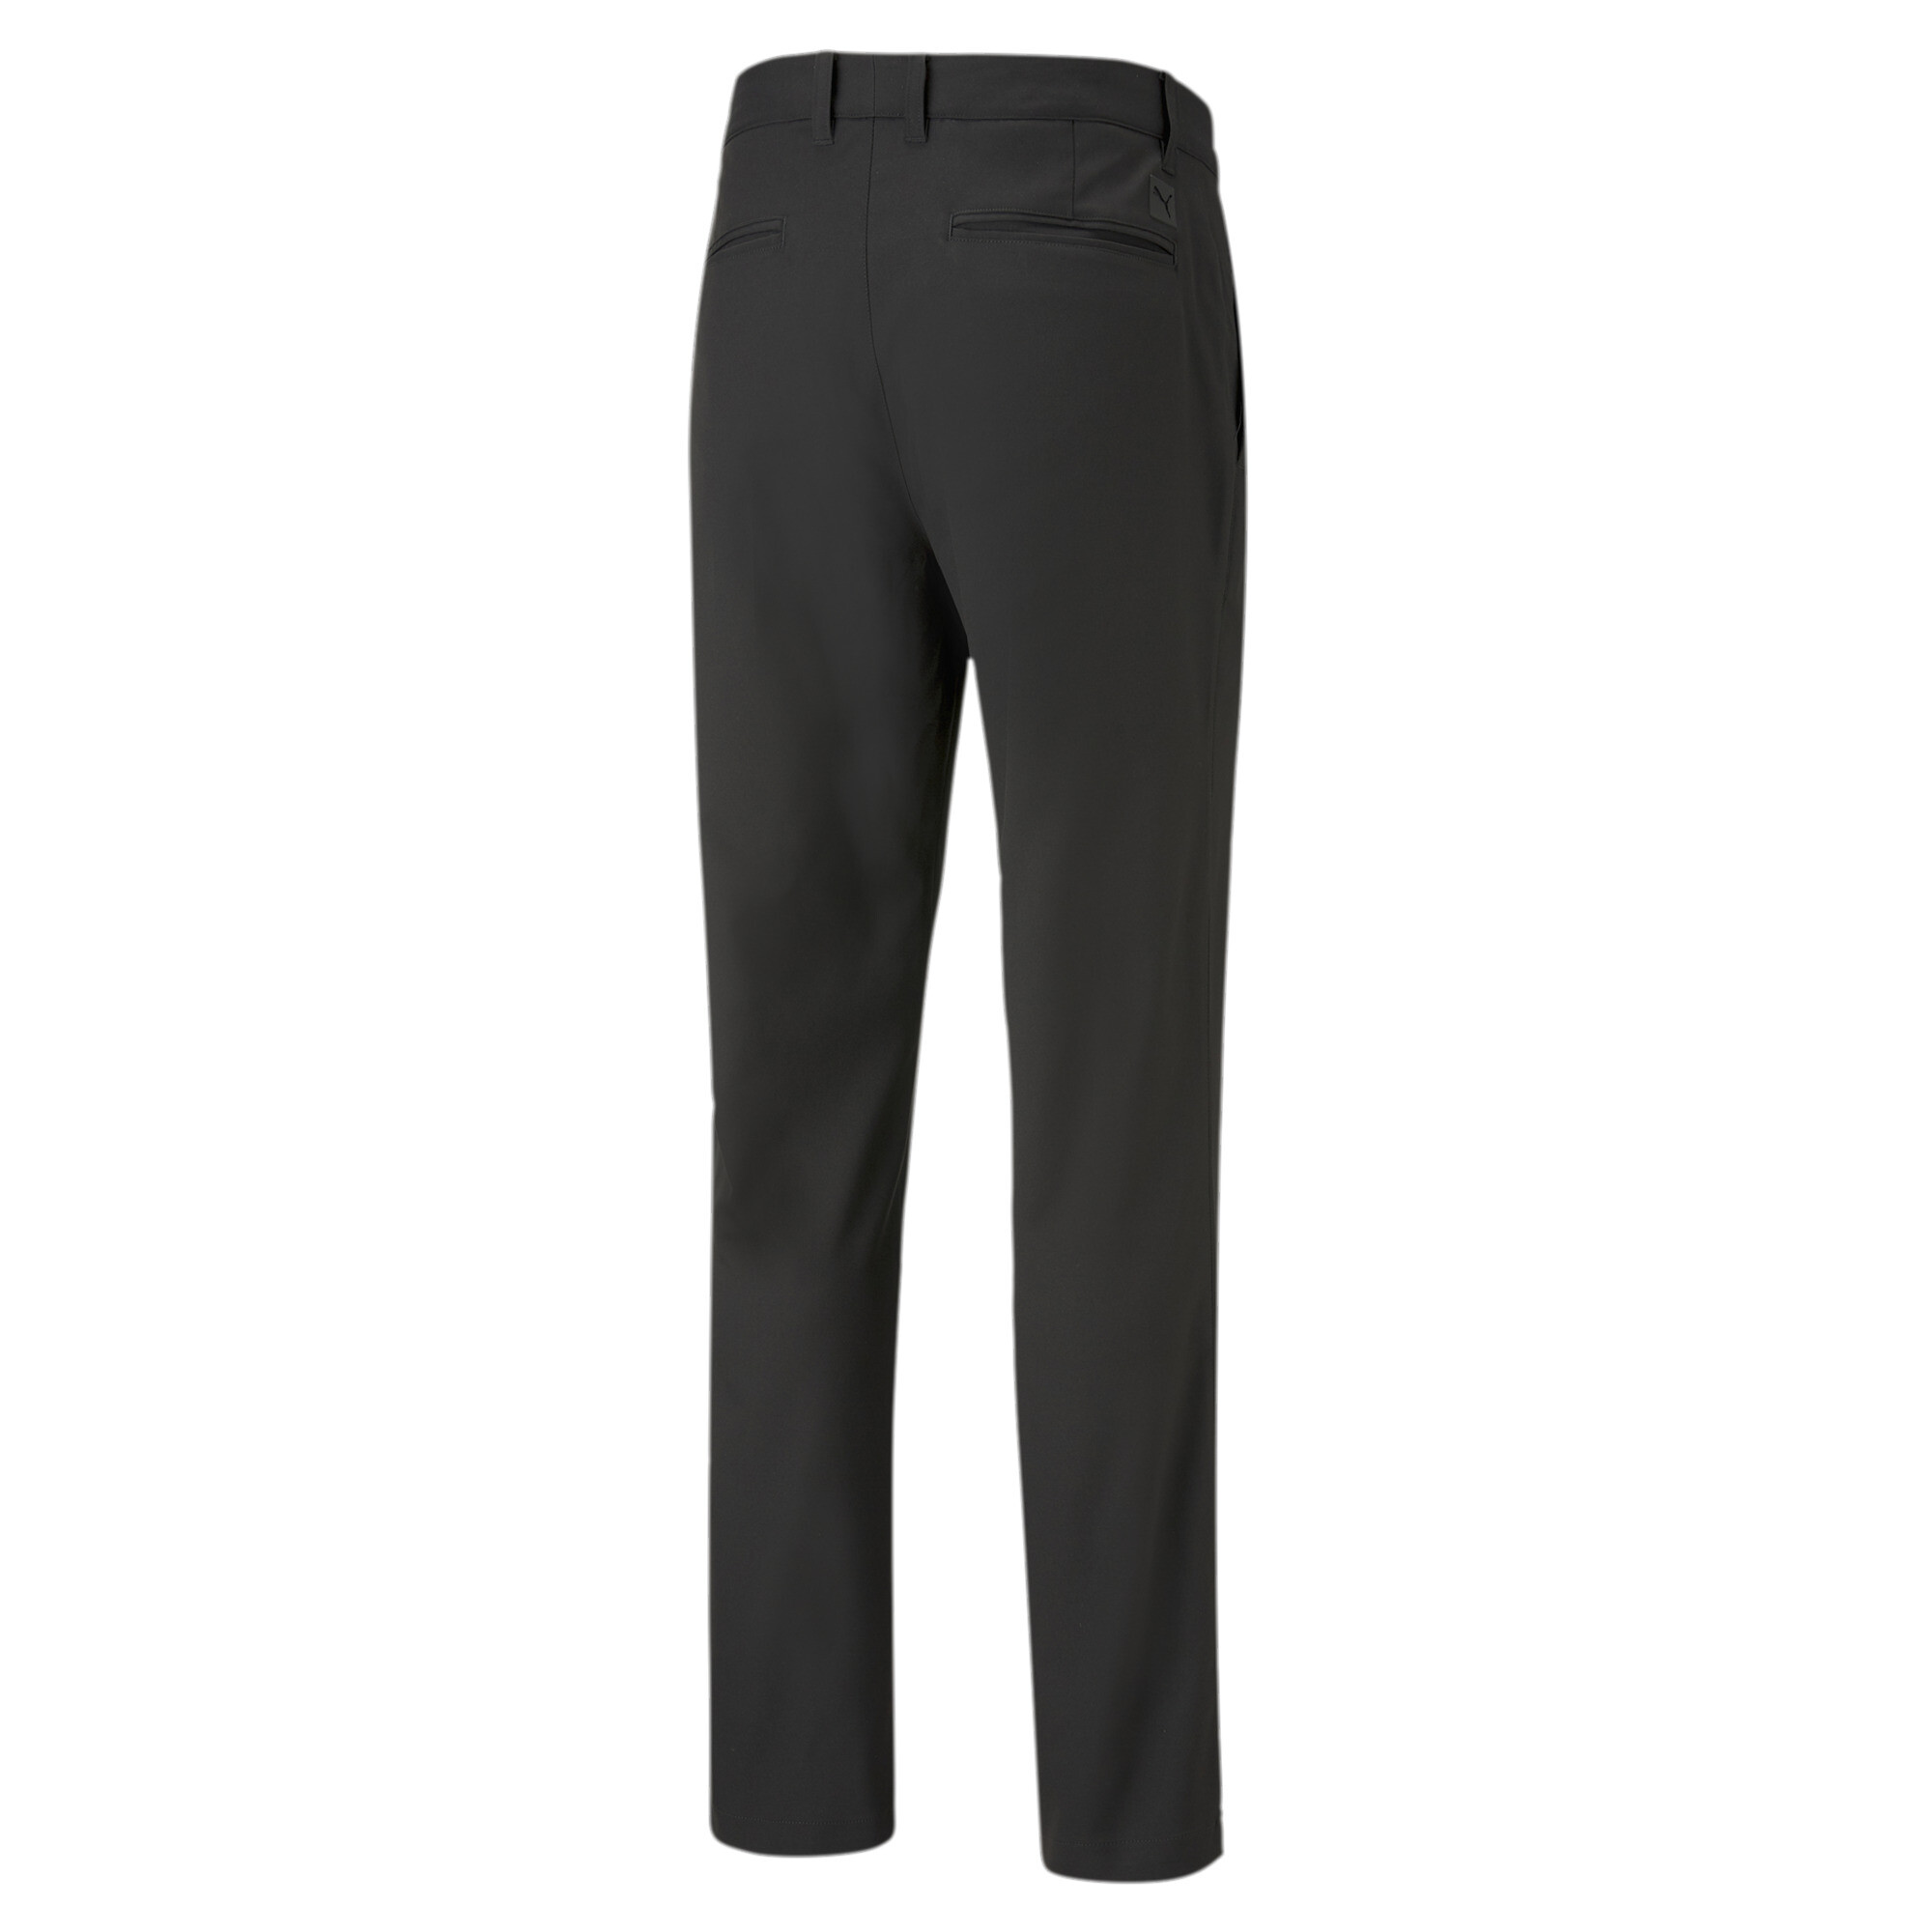 Men's Puma Dealer Golf Pants, Black, Size 40/36, Clothing